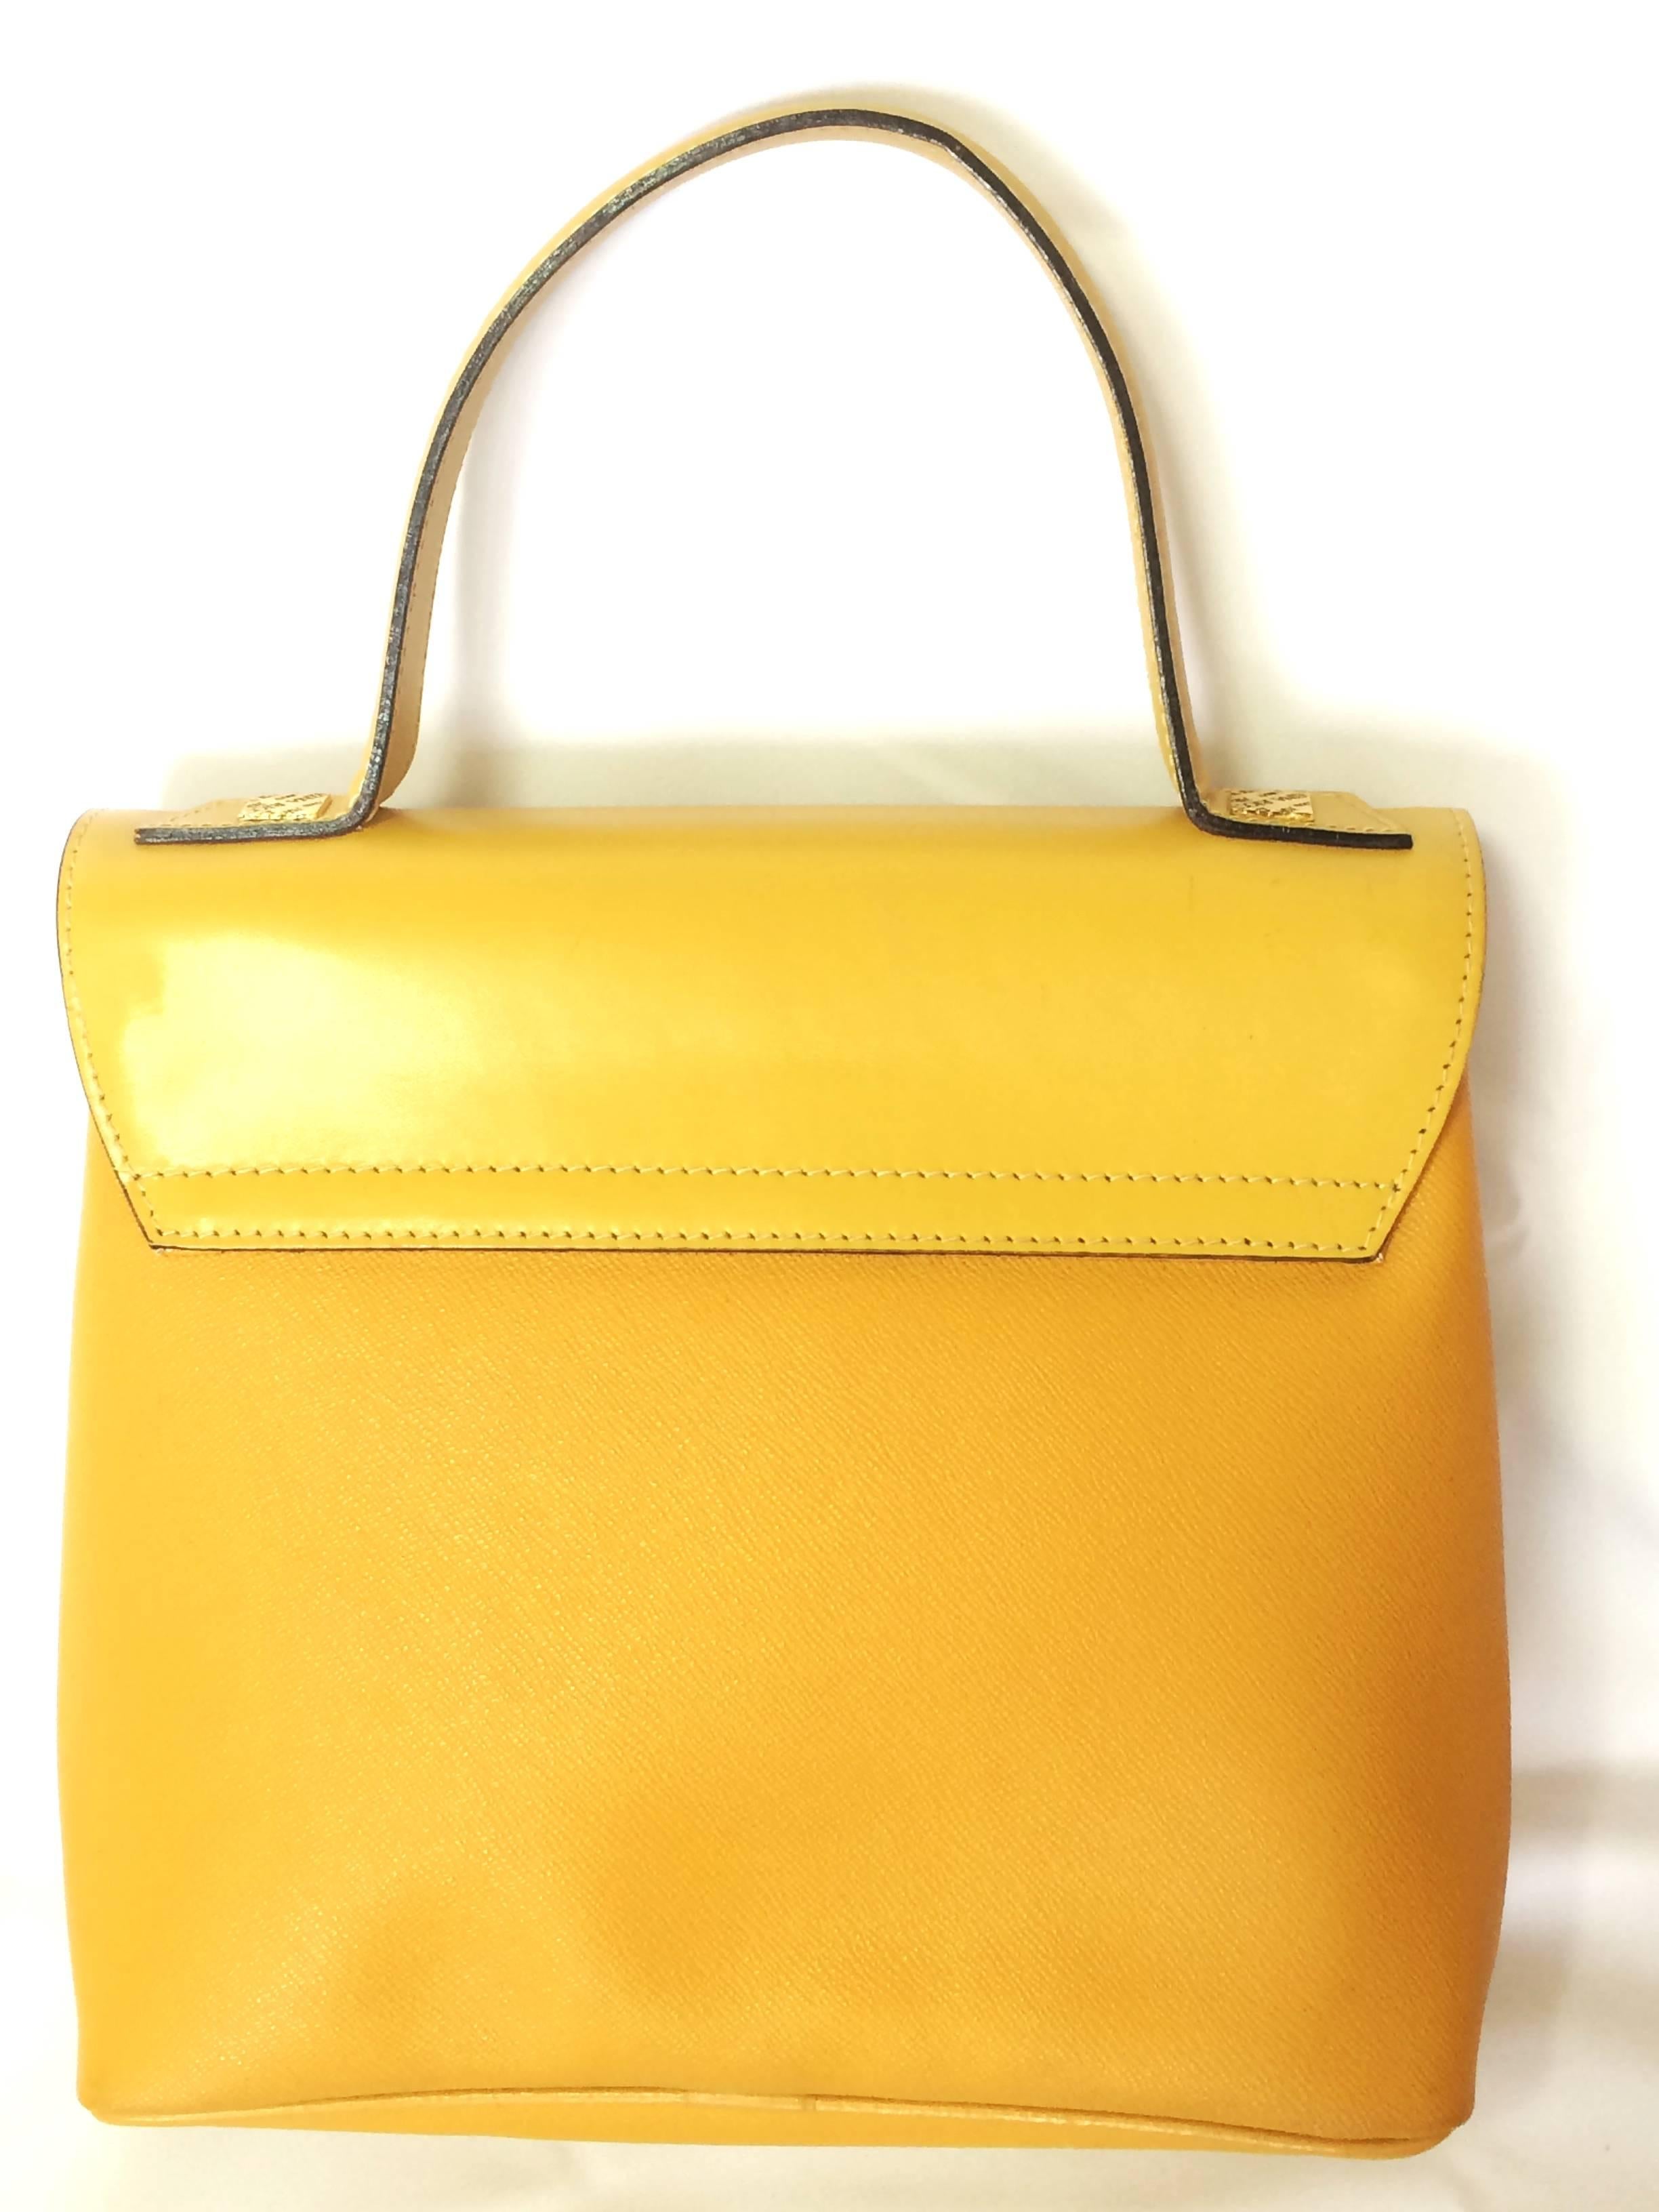 Yellow MINT. Vintage Nina Ricci yellow leather handbag purse with shoulder strap.